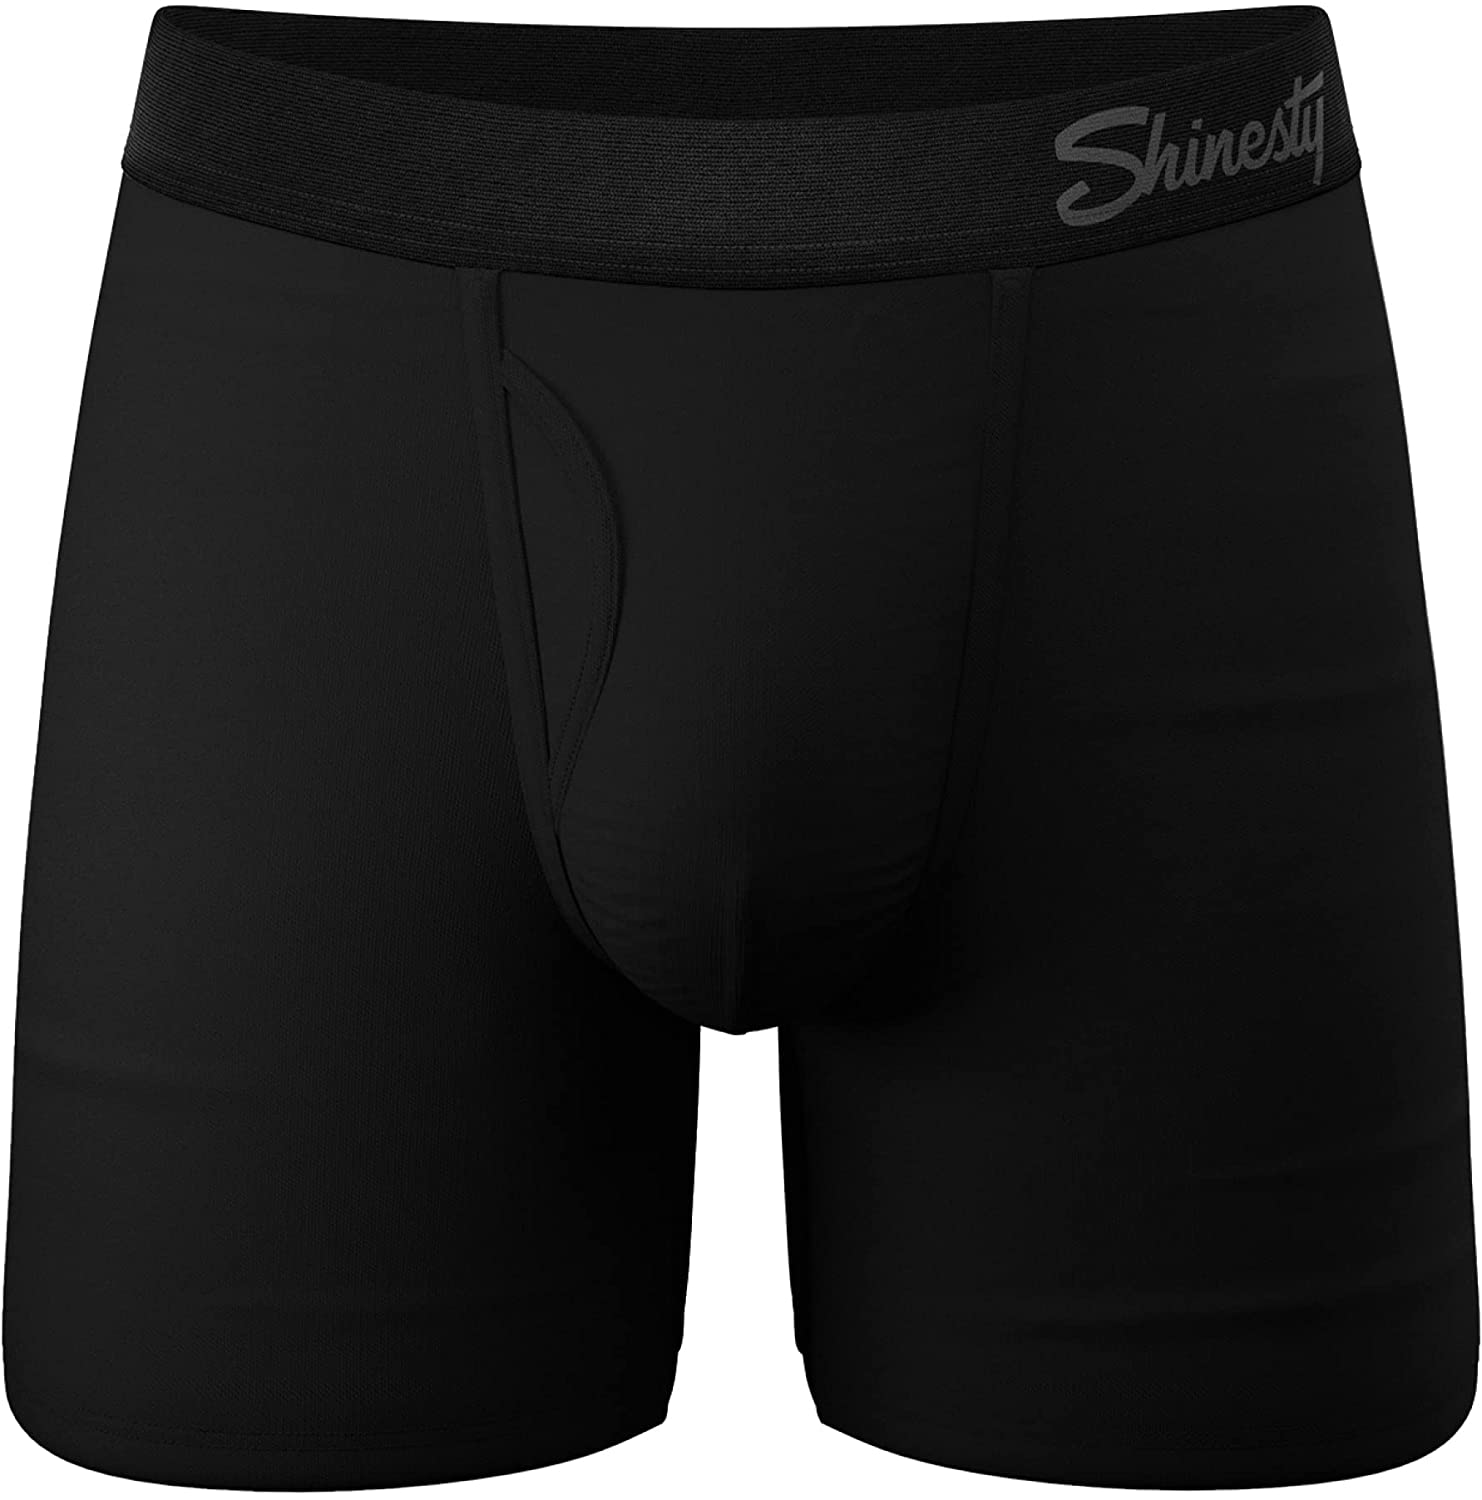 XL Men's Boxer Briefs - Micro Modal Ball Hammock Underwear